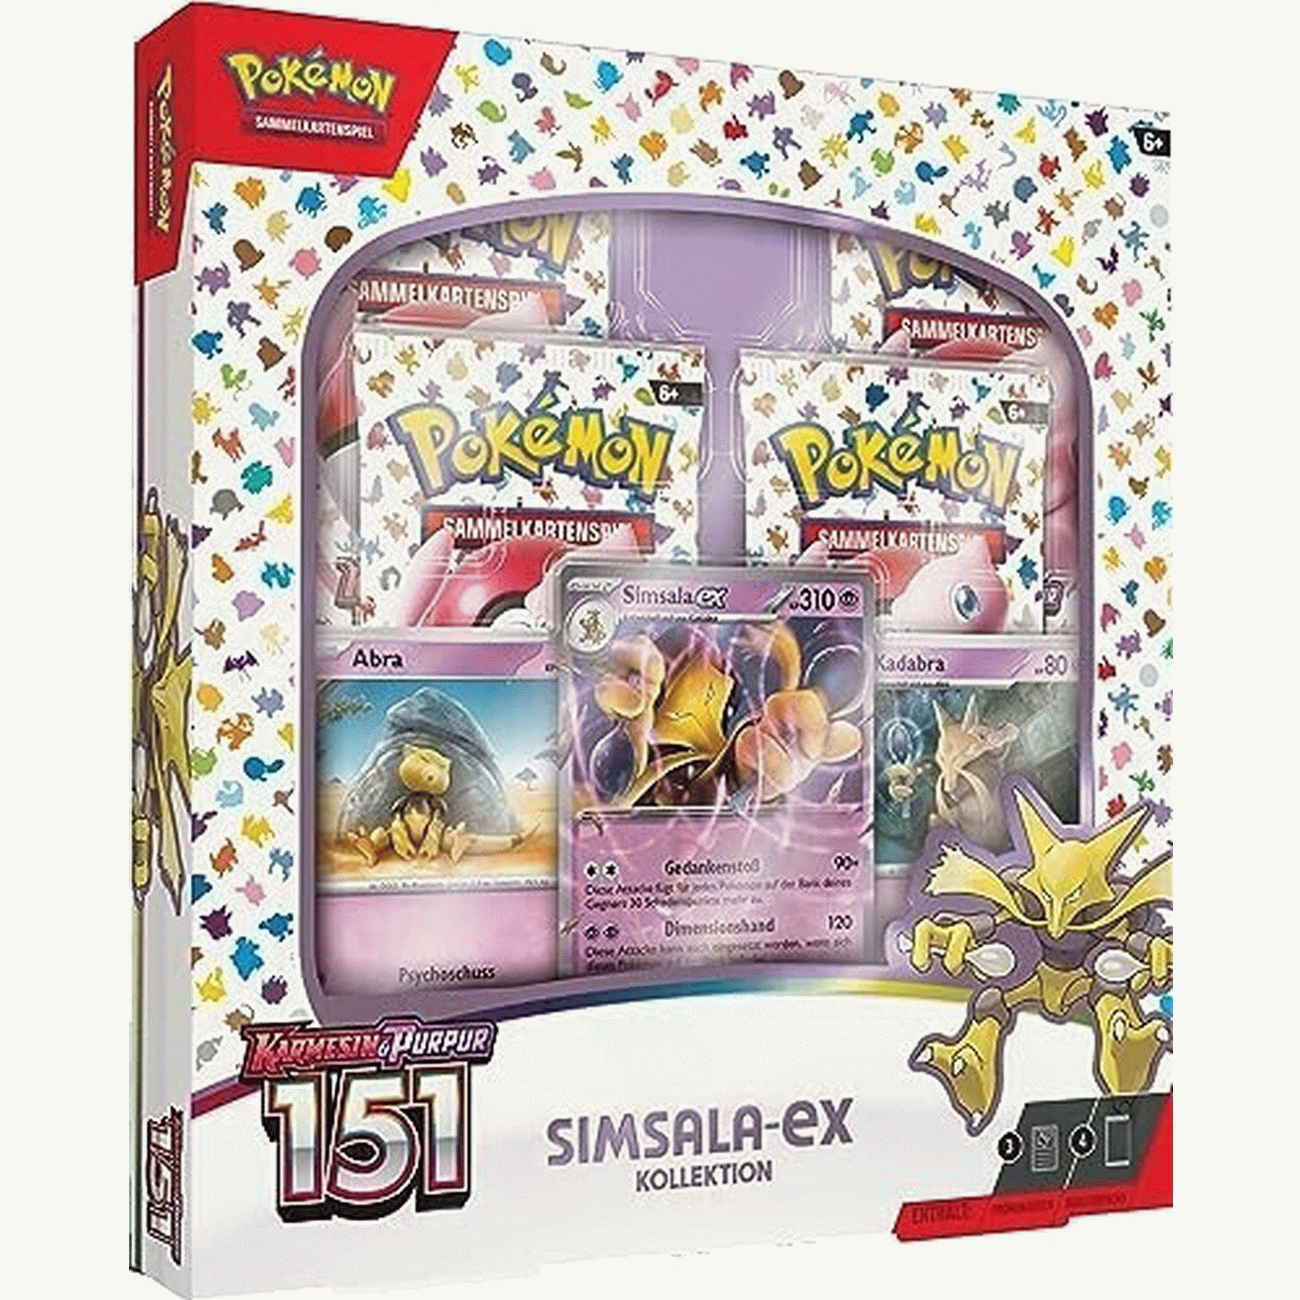 Pokemon Simsala EX Kollektion - Karmesin und Purpur 151